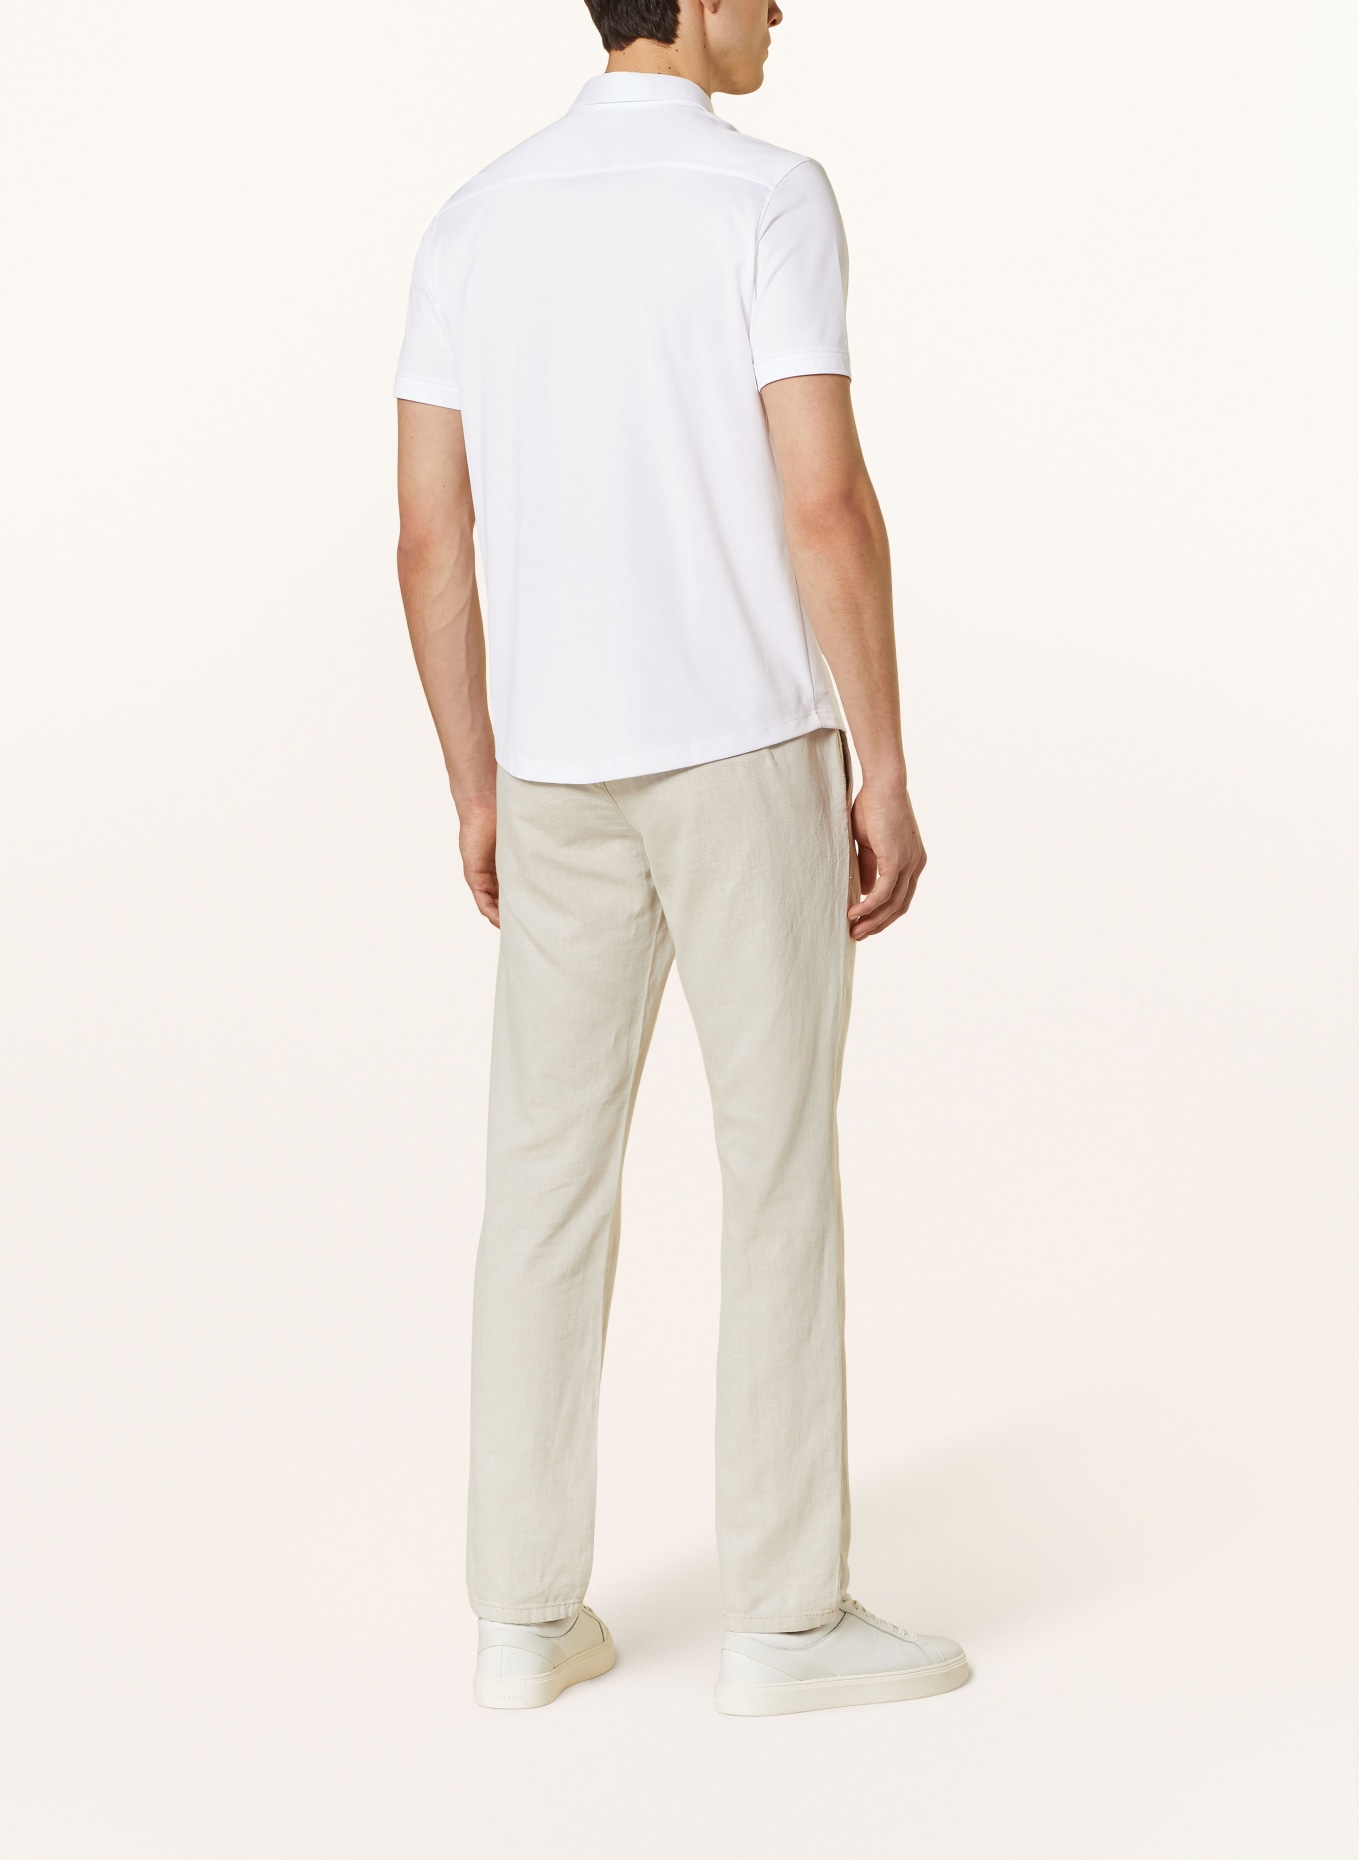 RAGMAN Kurzarm-Hemd Modern Fit, Farbe: WEISS (Bild 3)